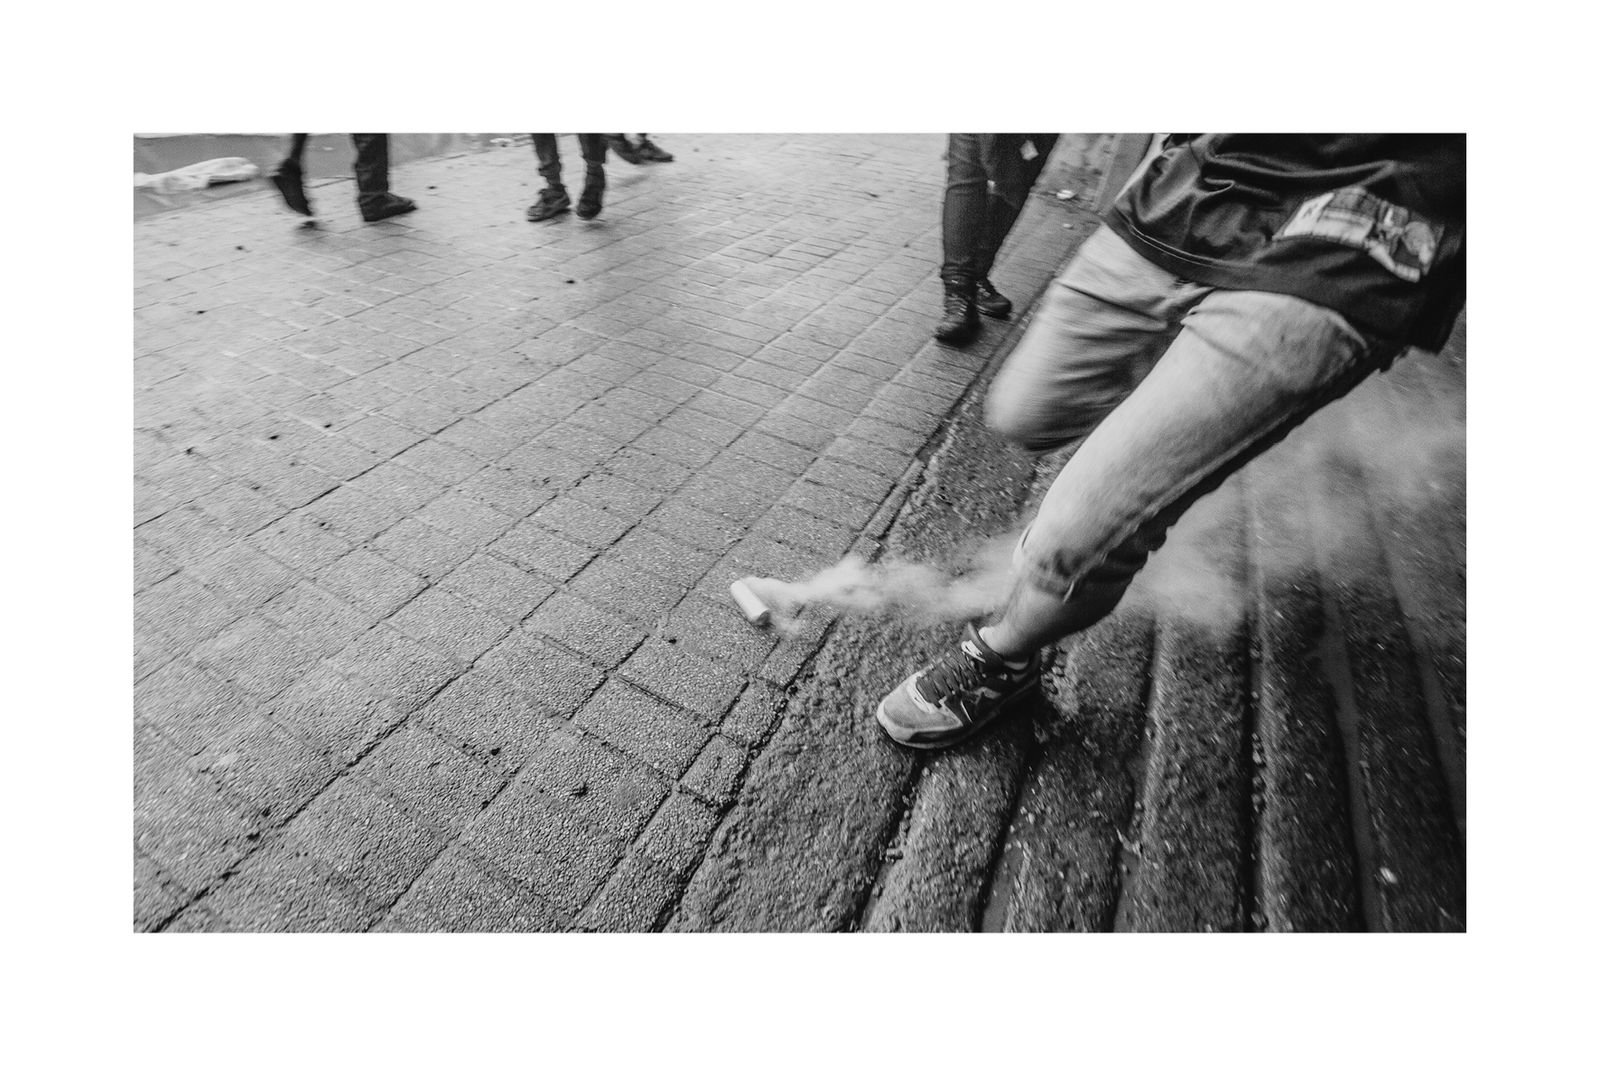 © Matias Cortez - man kicking out a tear bomb gas